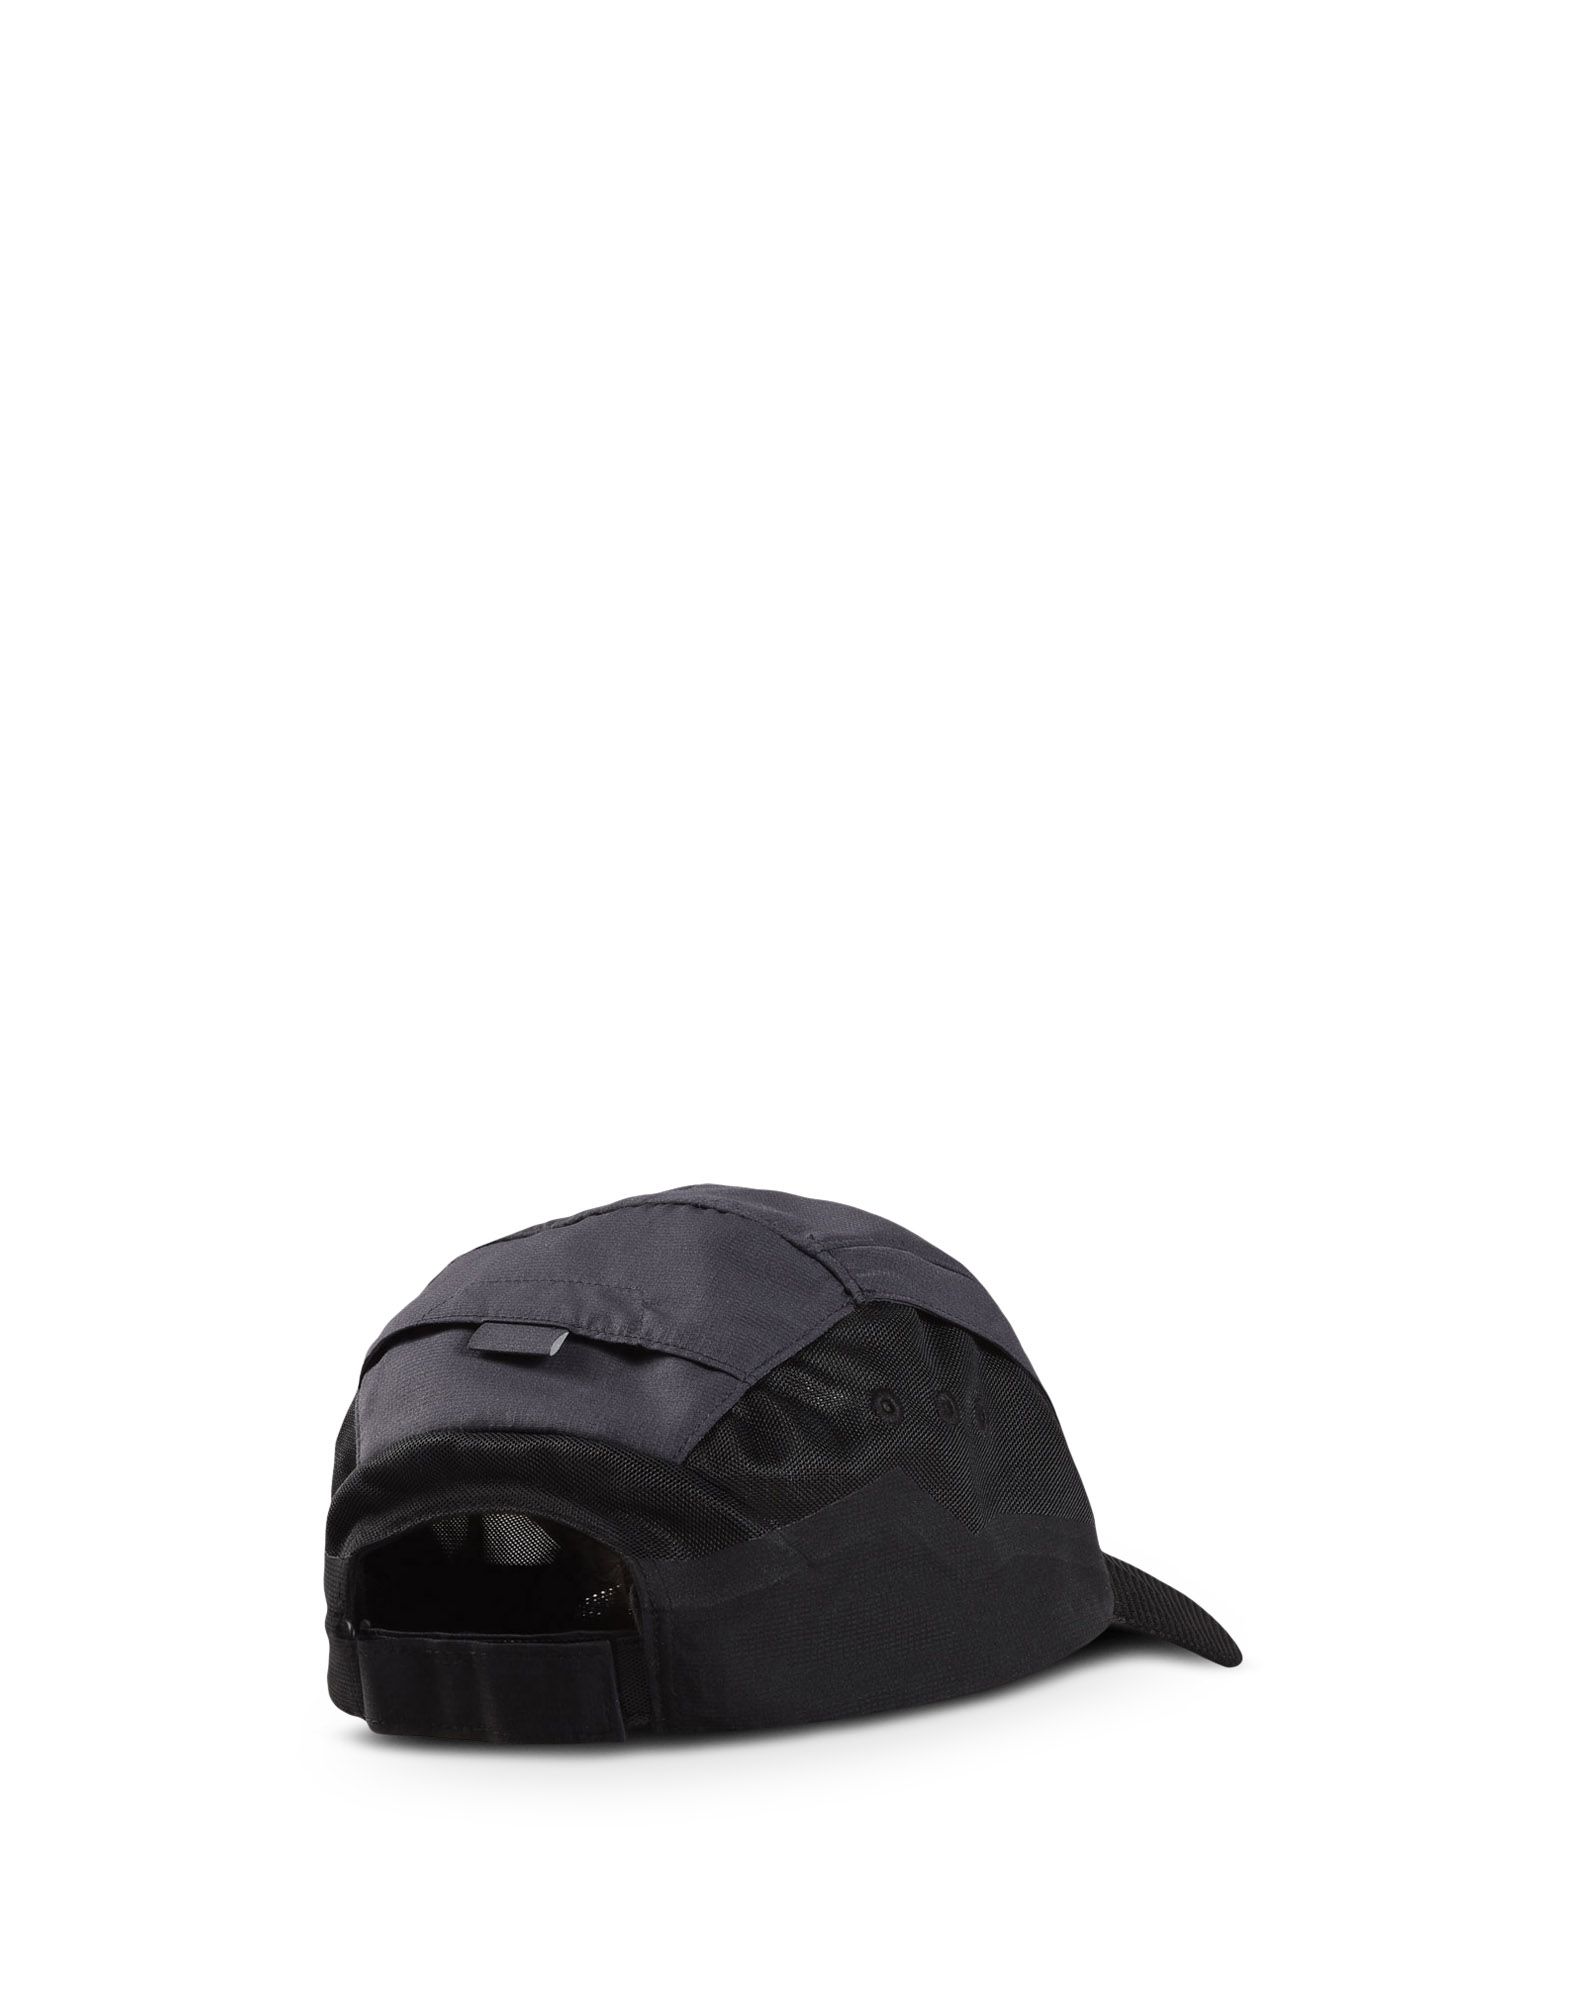 Y 3 RUN BLACK CAP for Women | Adidas Y-3 Official Store